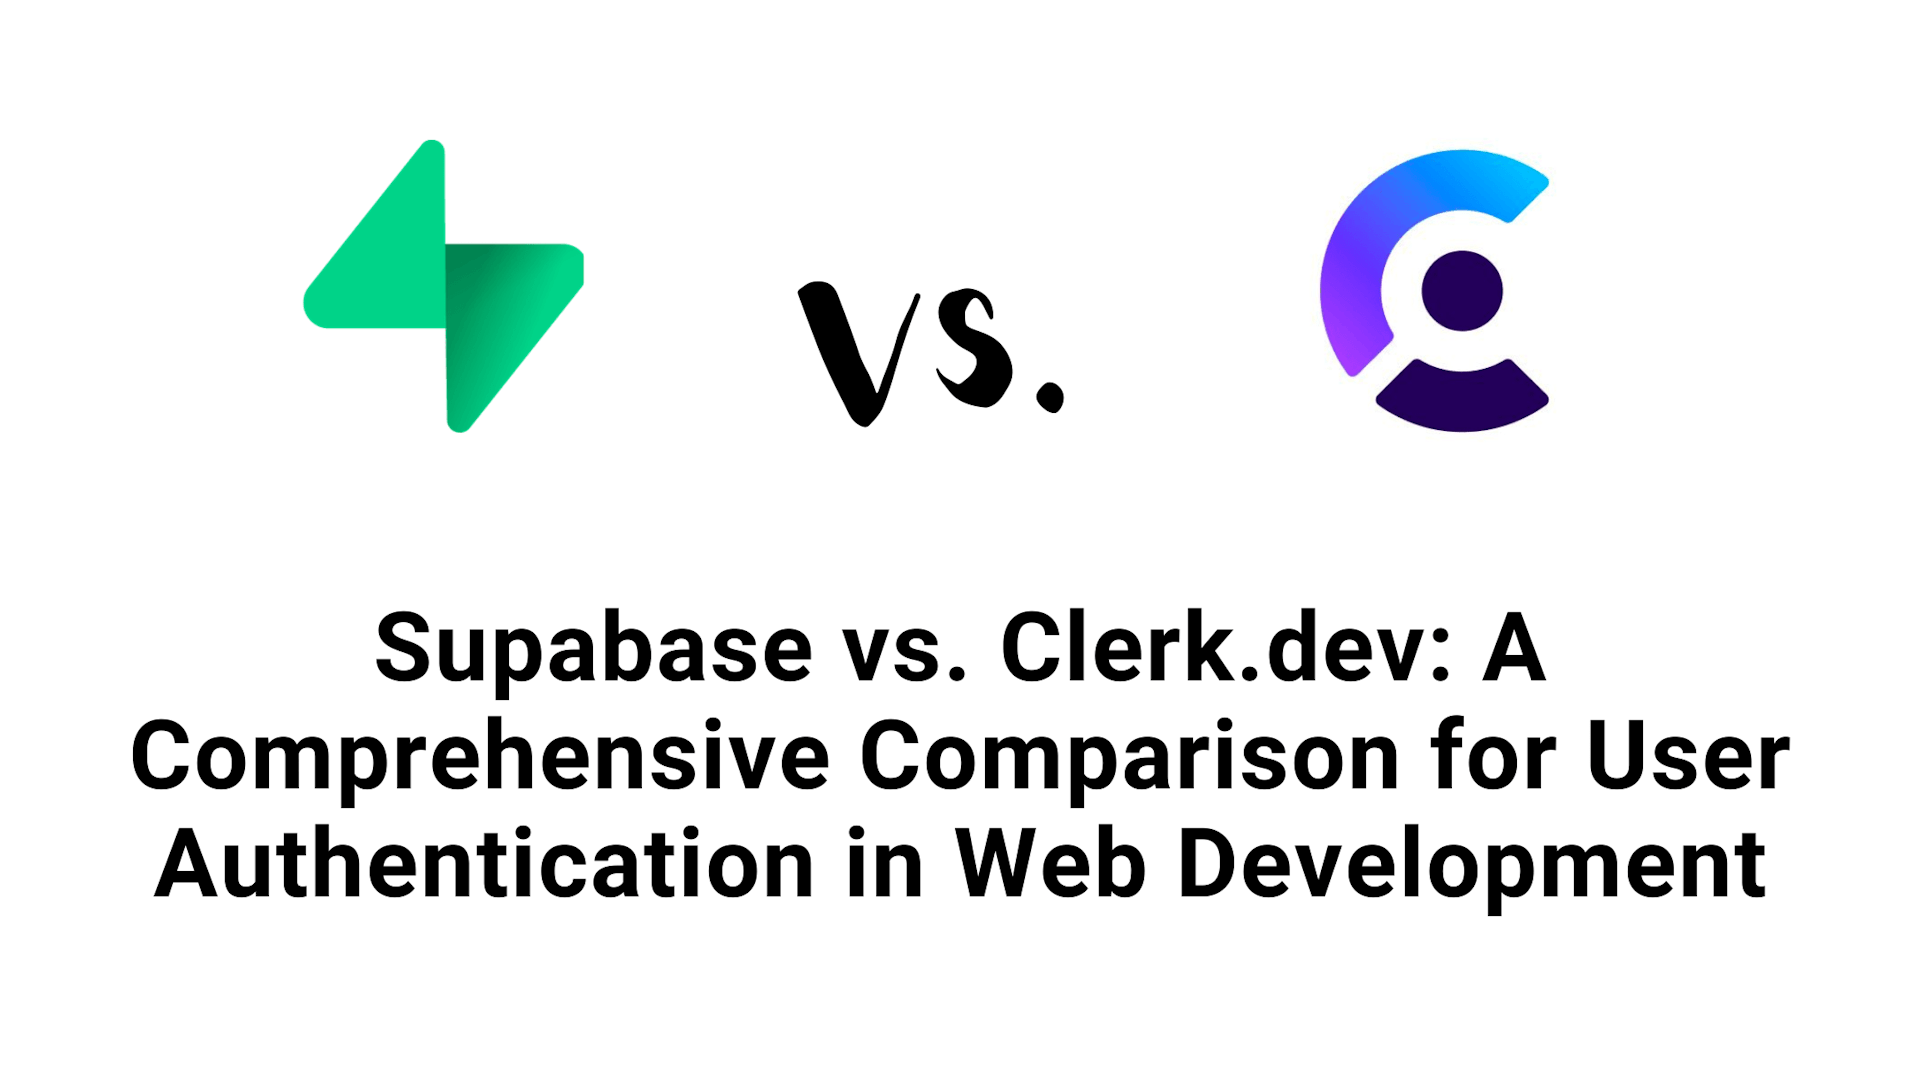 Supabase vs. Clerk.dev: Comparative Analysis of Auth Tools